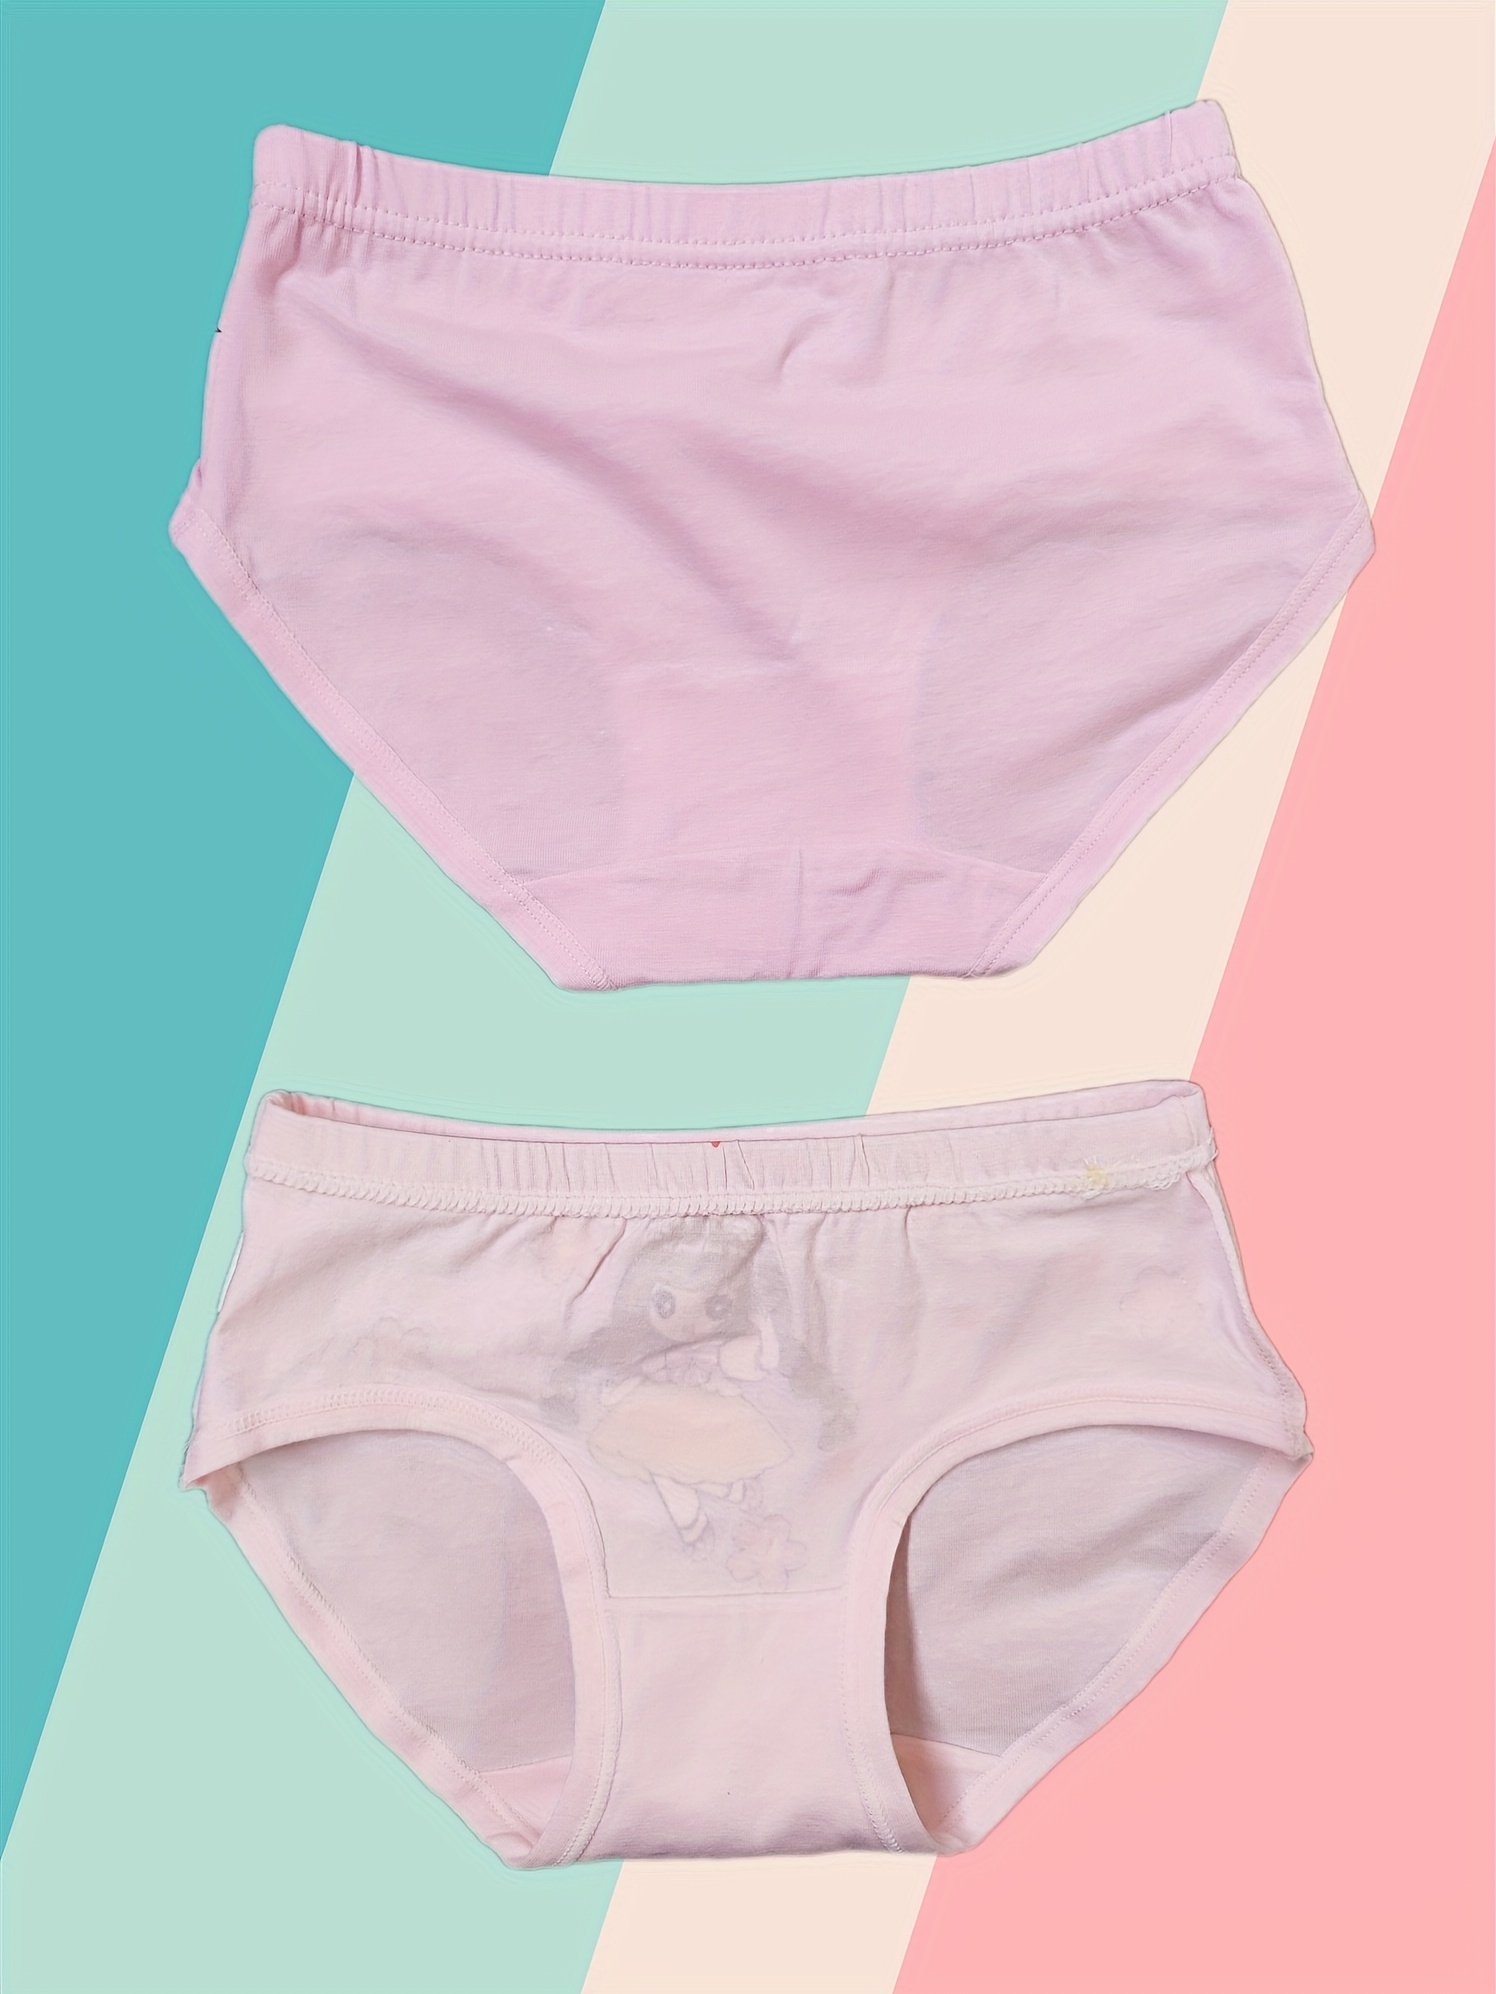 Sweet Girls Cotton Panties Underwear School Cute Brief Japanese Students  Knicker